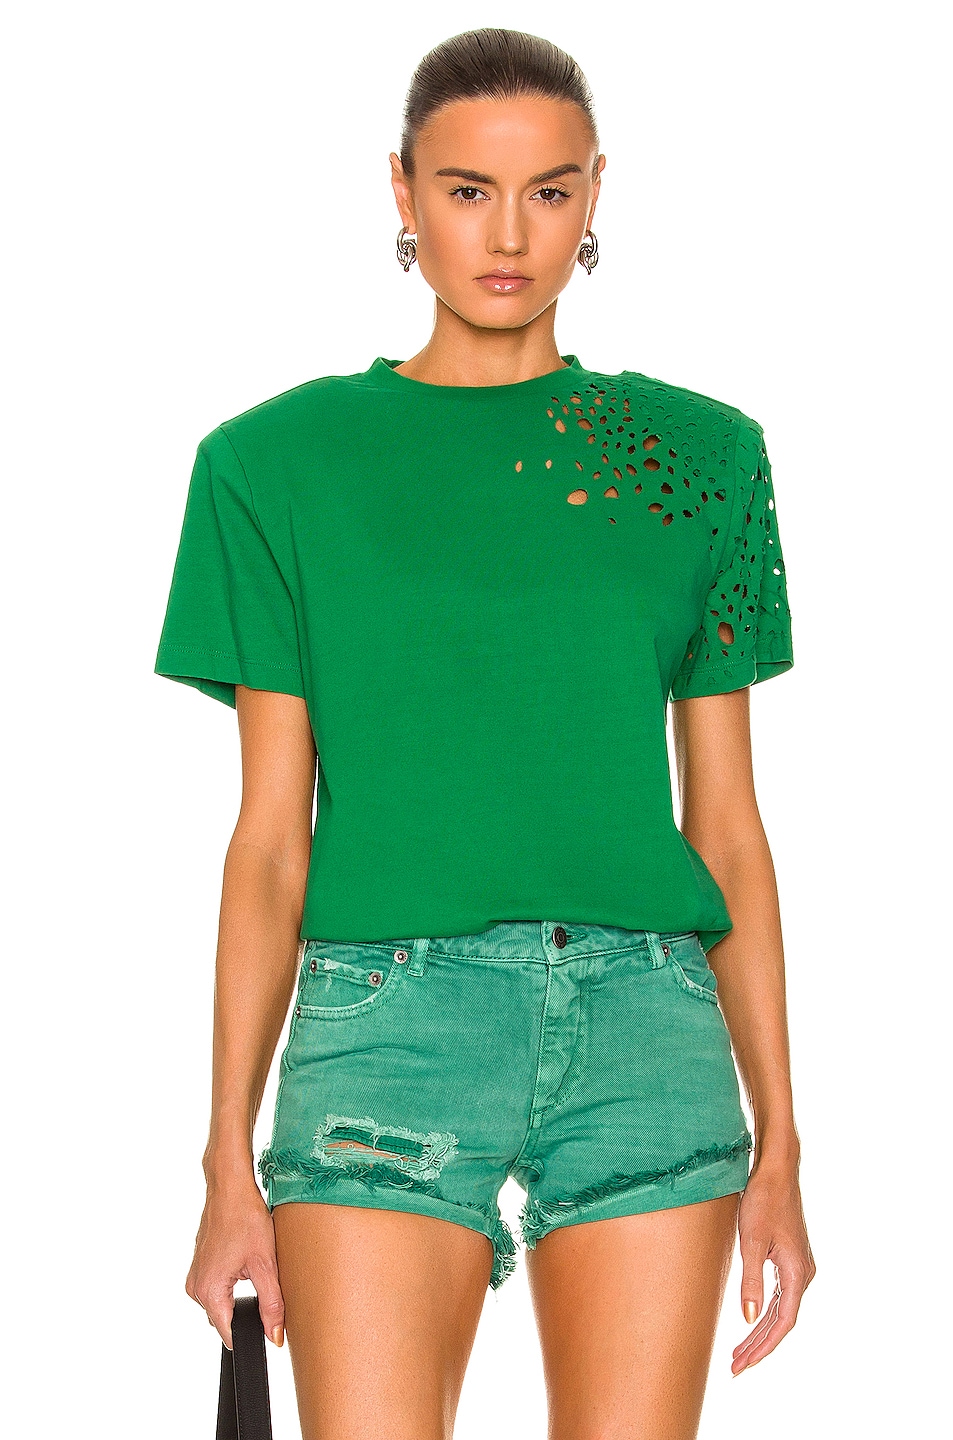 SER.O.YA Caroline T-Shirt in Amazon | FWRD